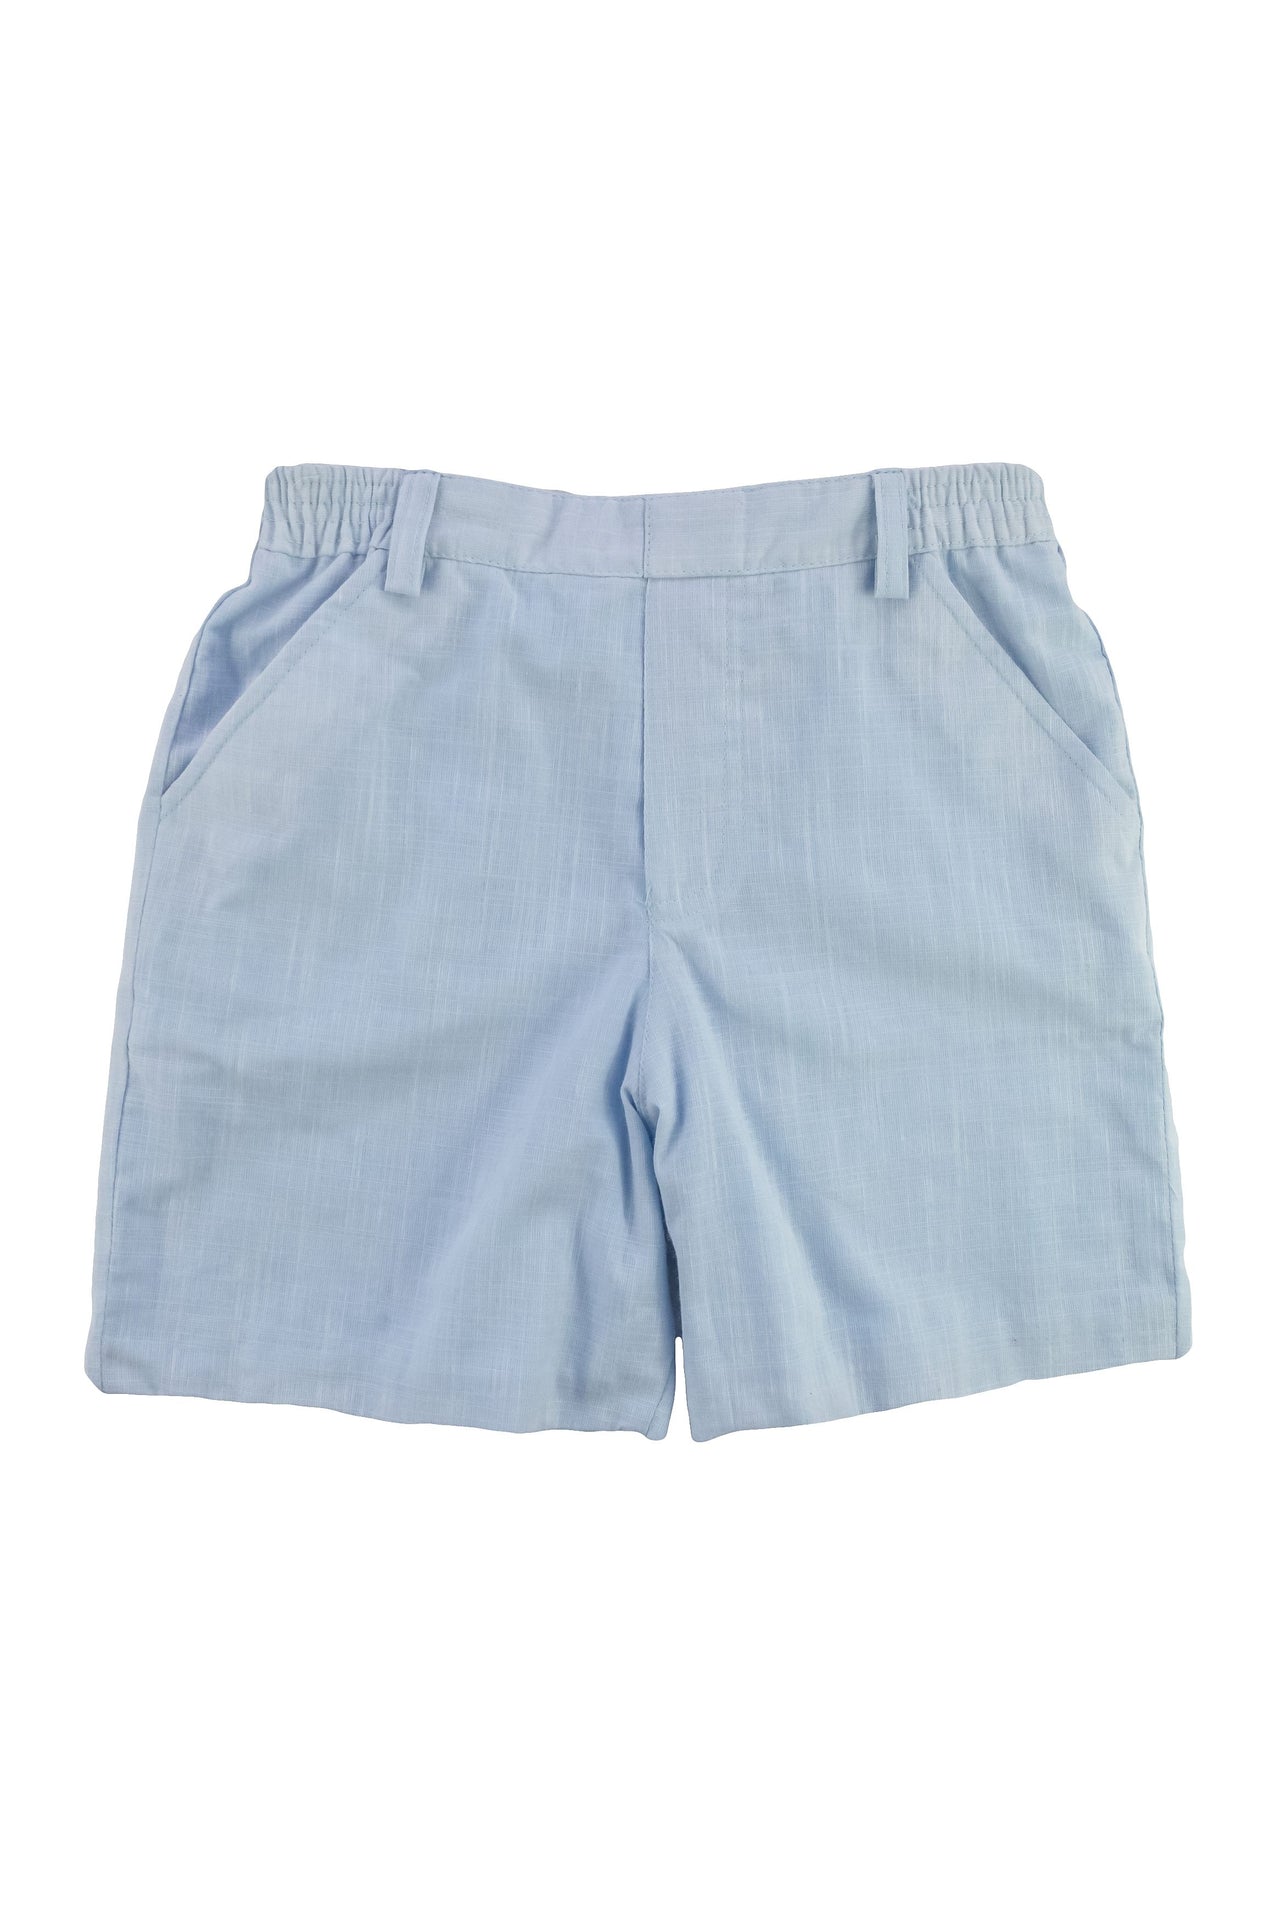 Florence Eiseman Linen Like Shorts C5250 5012